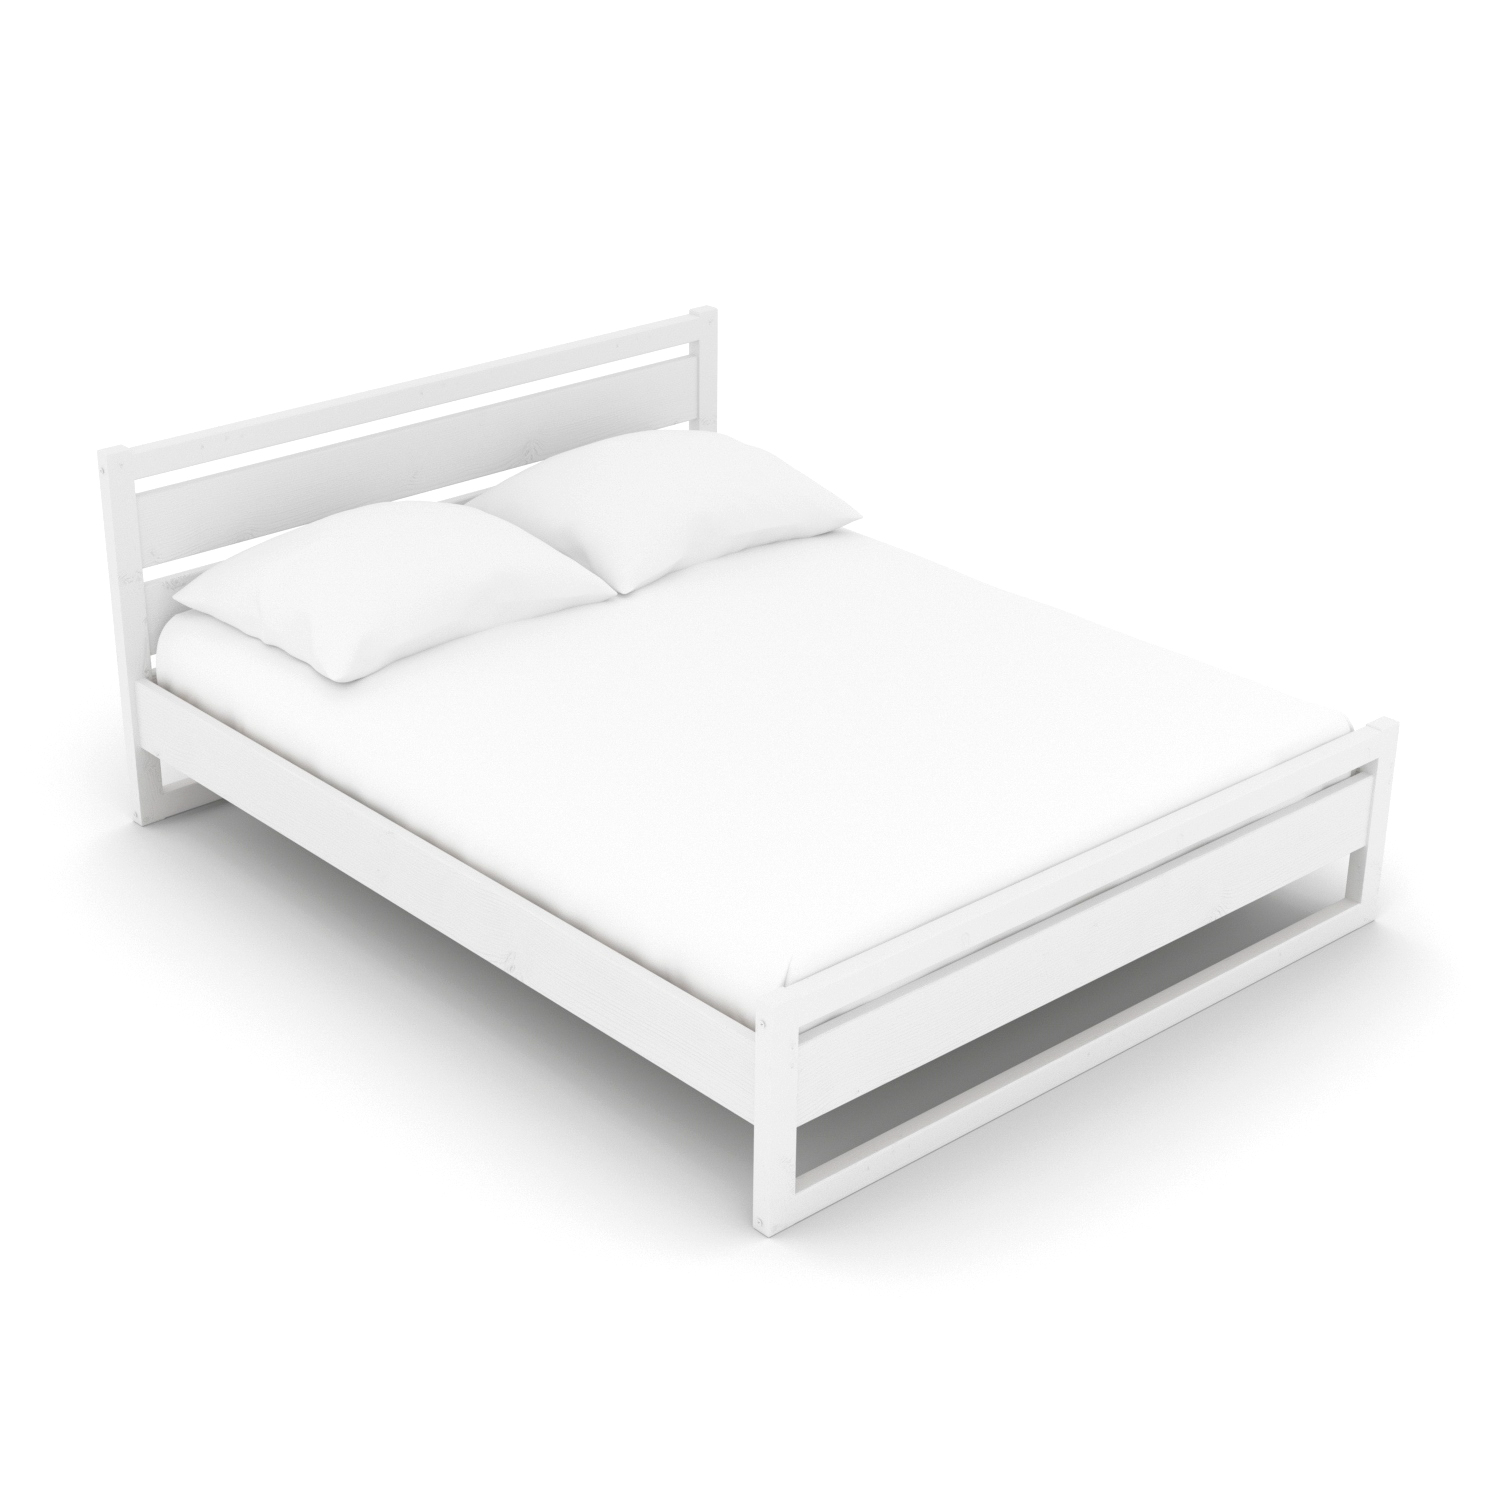 Кровать AS Андреа 160x200 белая эмаль, цвет белый, размер 200х160х29 - фото 1